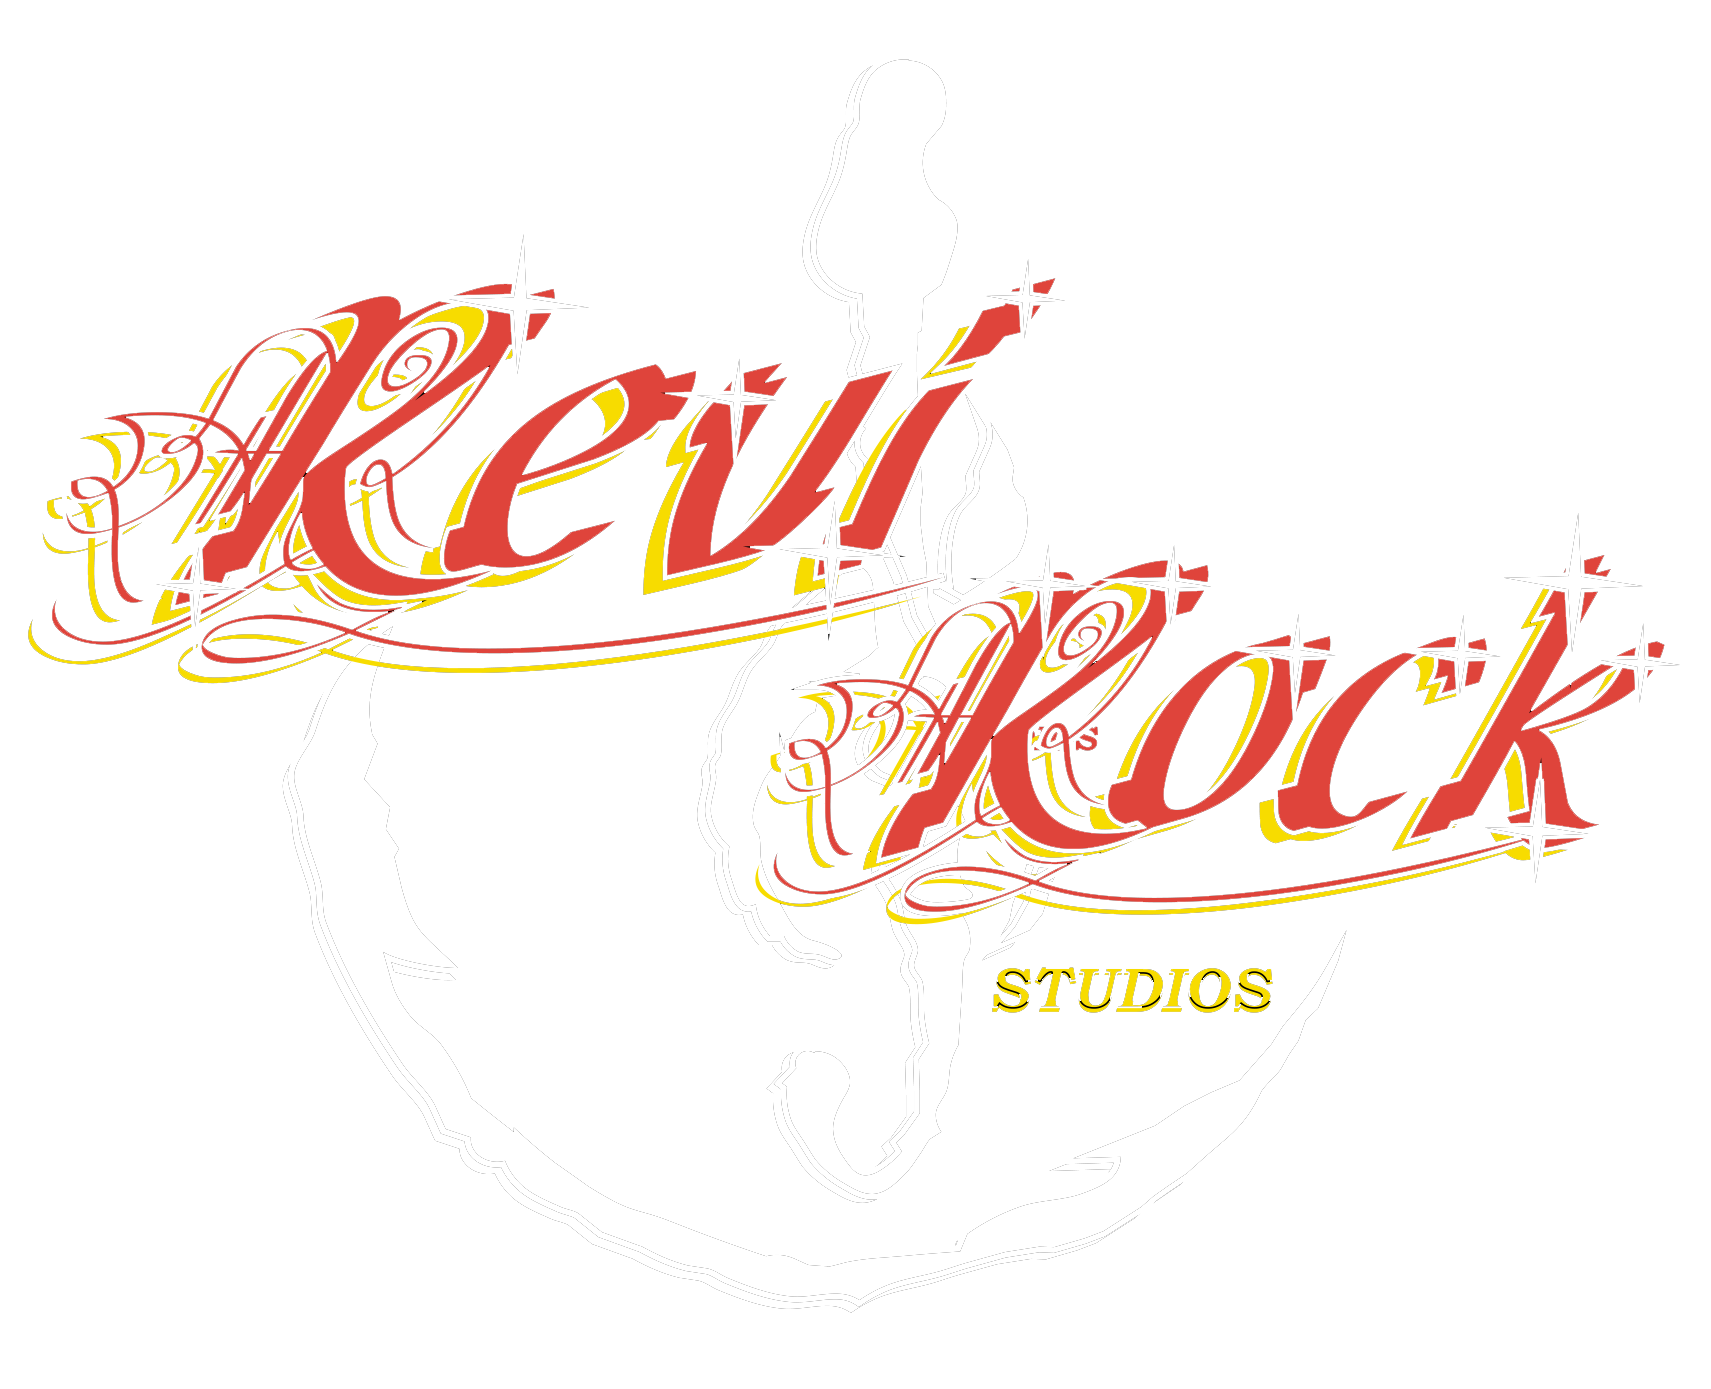 Revirock Studios